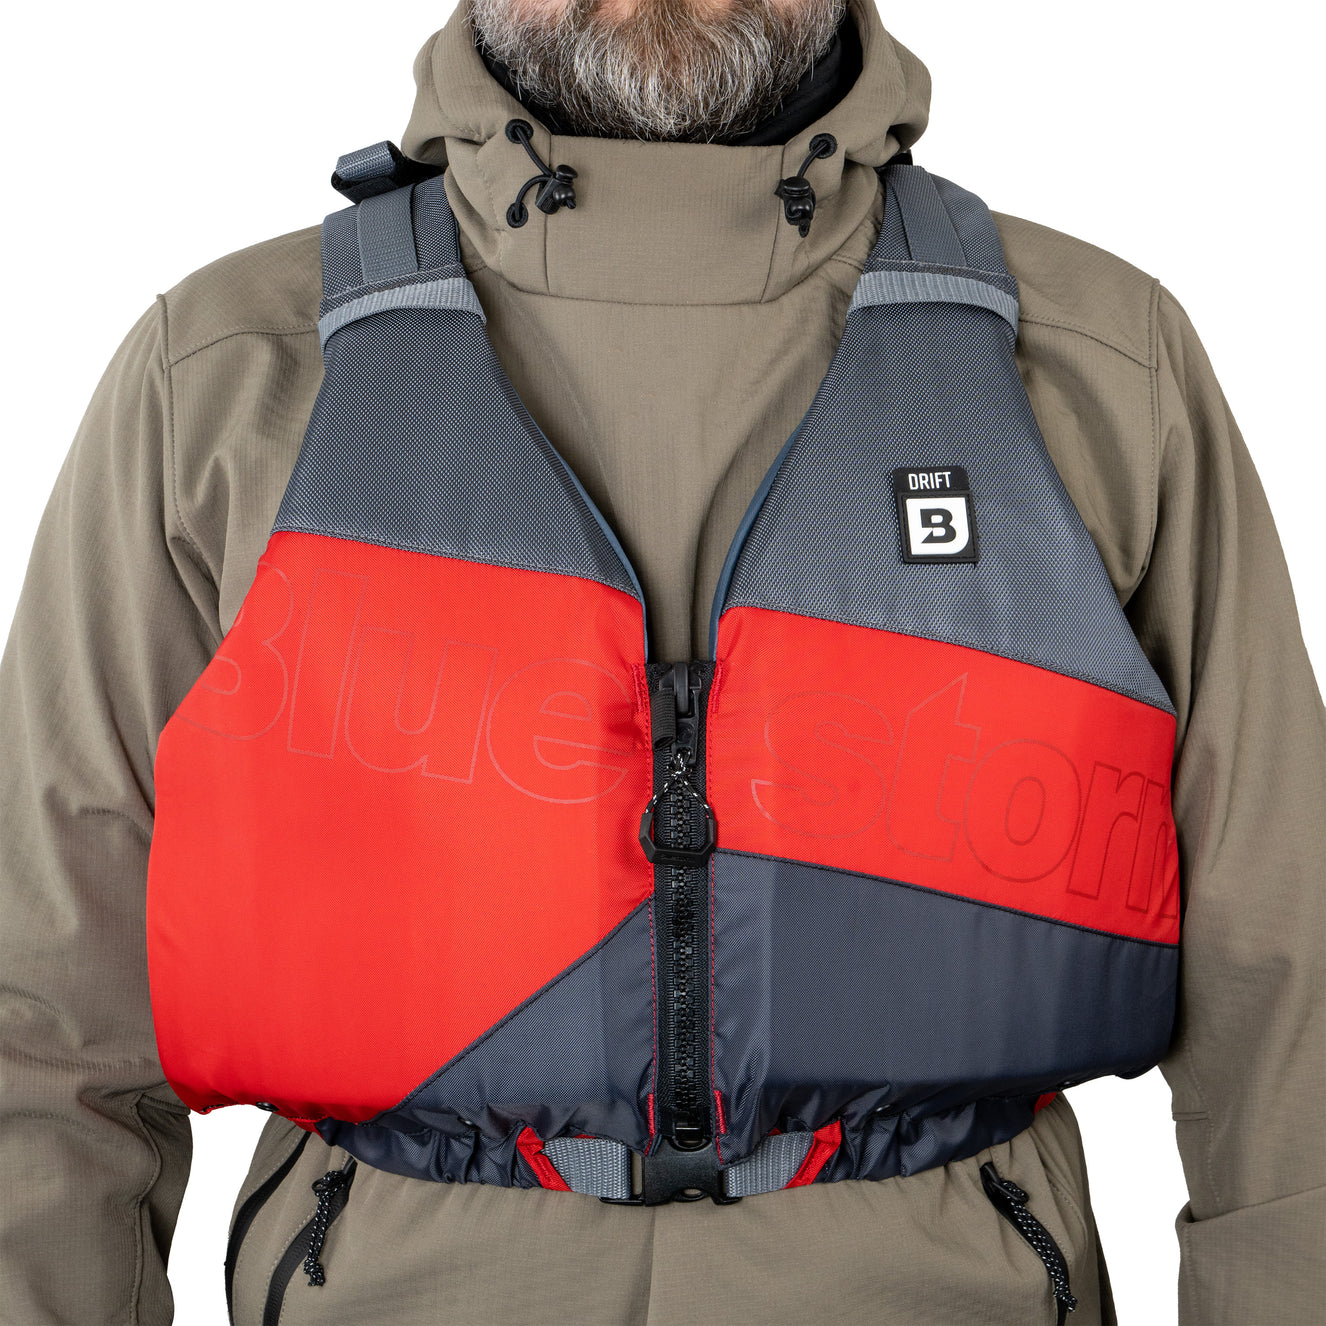 BLUESTORM Drift Kayak Life Jacket (PFD) | Fully Adjustable | Universal Sized | US Coast Guard Approved | for Kayaking, Paddling, SUP, Fishing and More